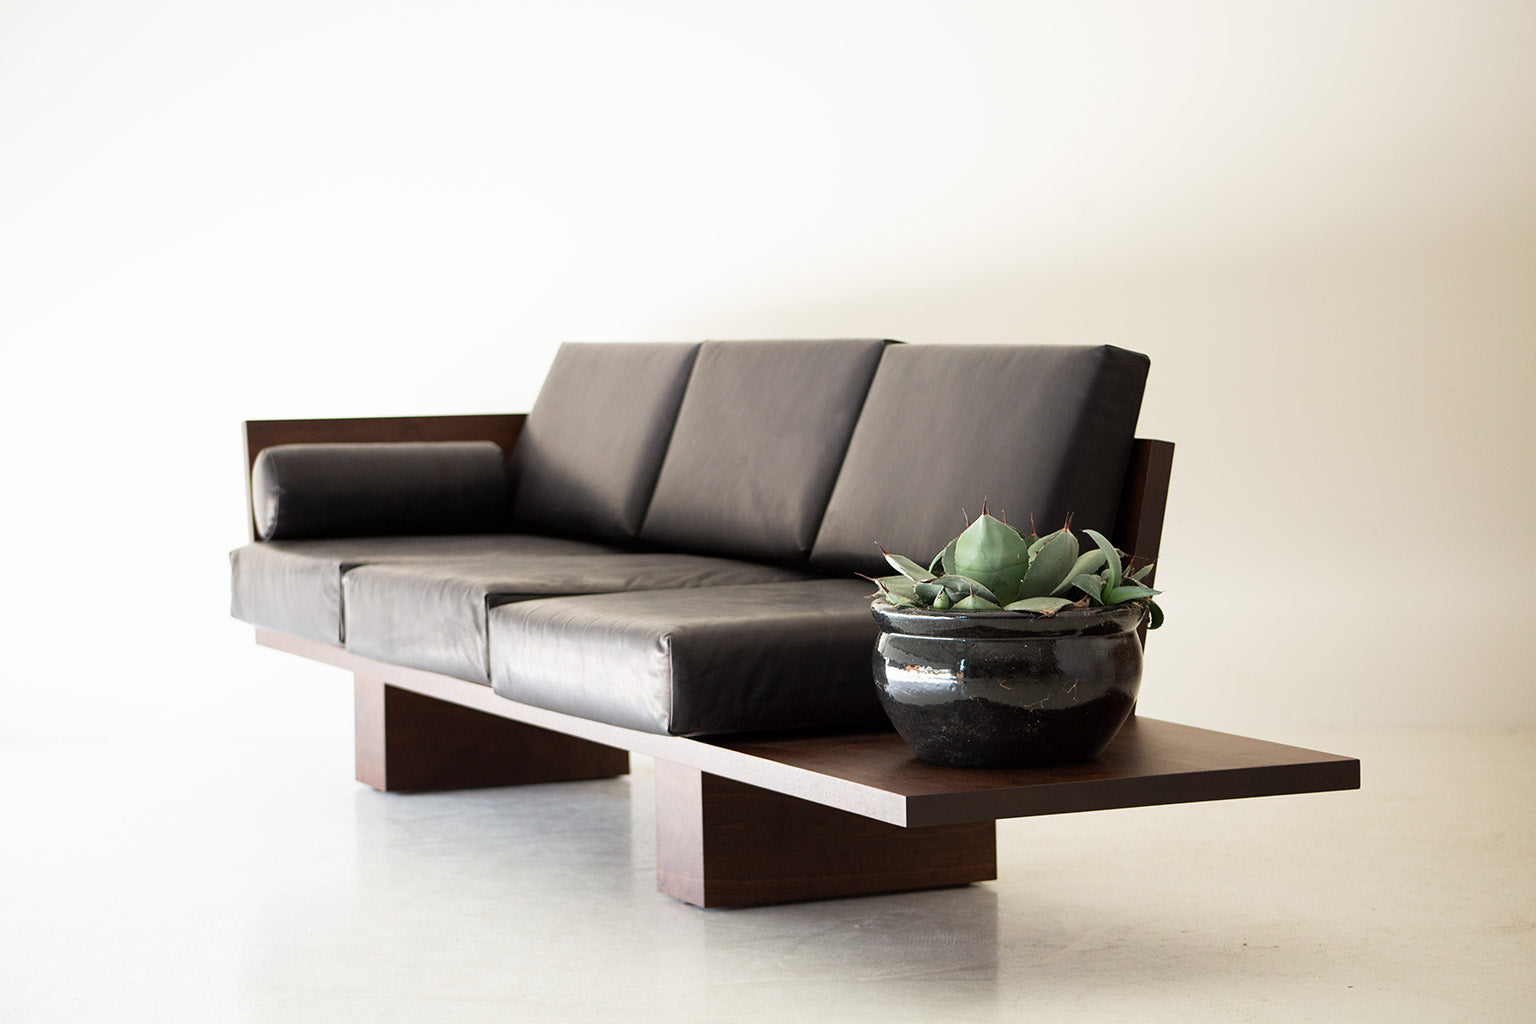 modern-walnut-leather-sofa-suelo-03